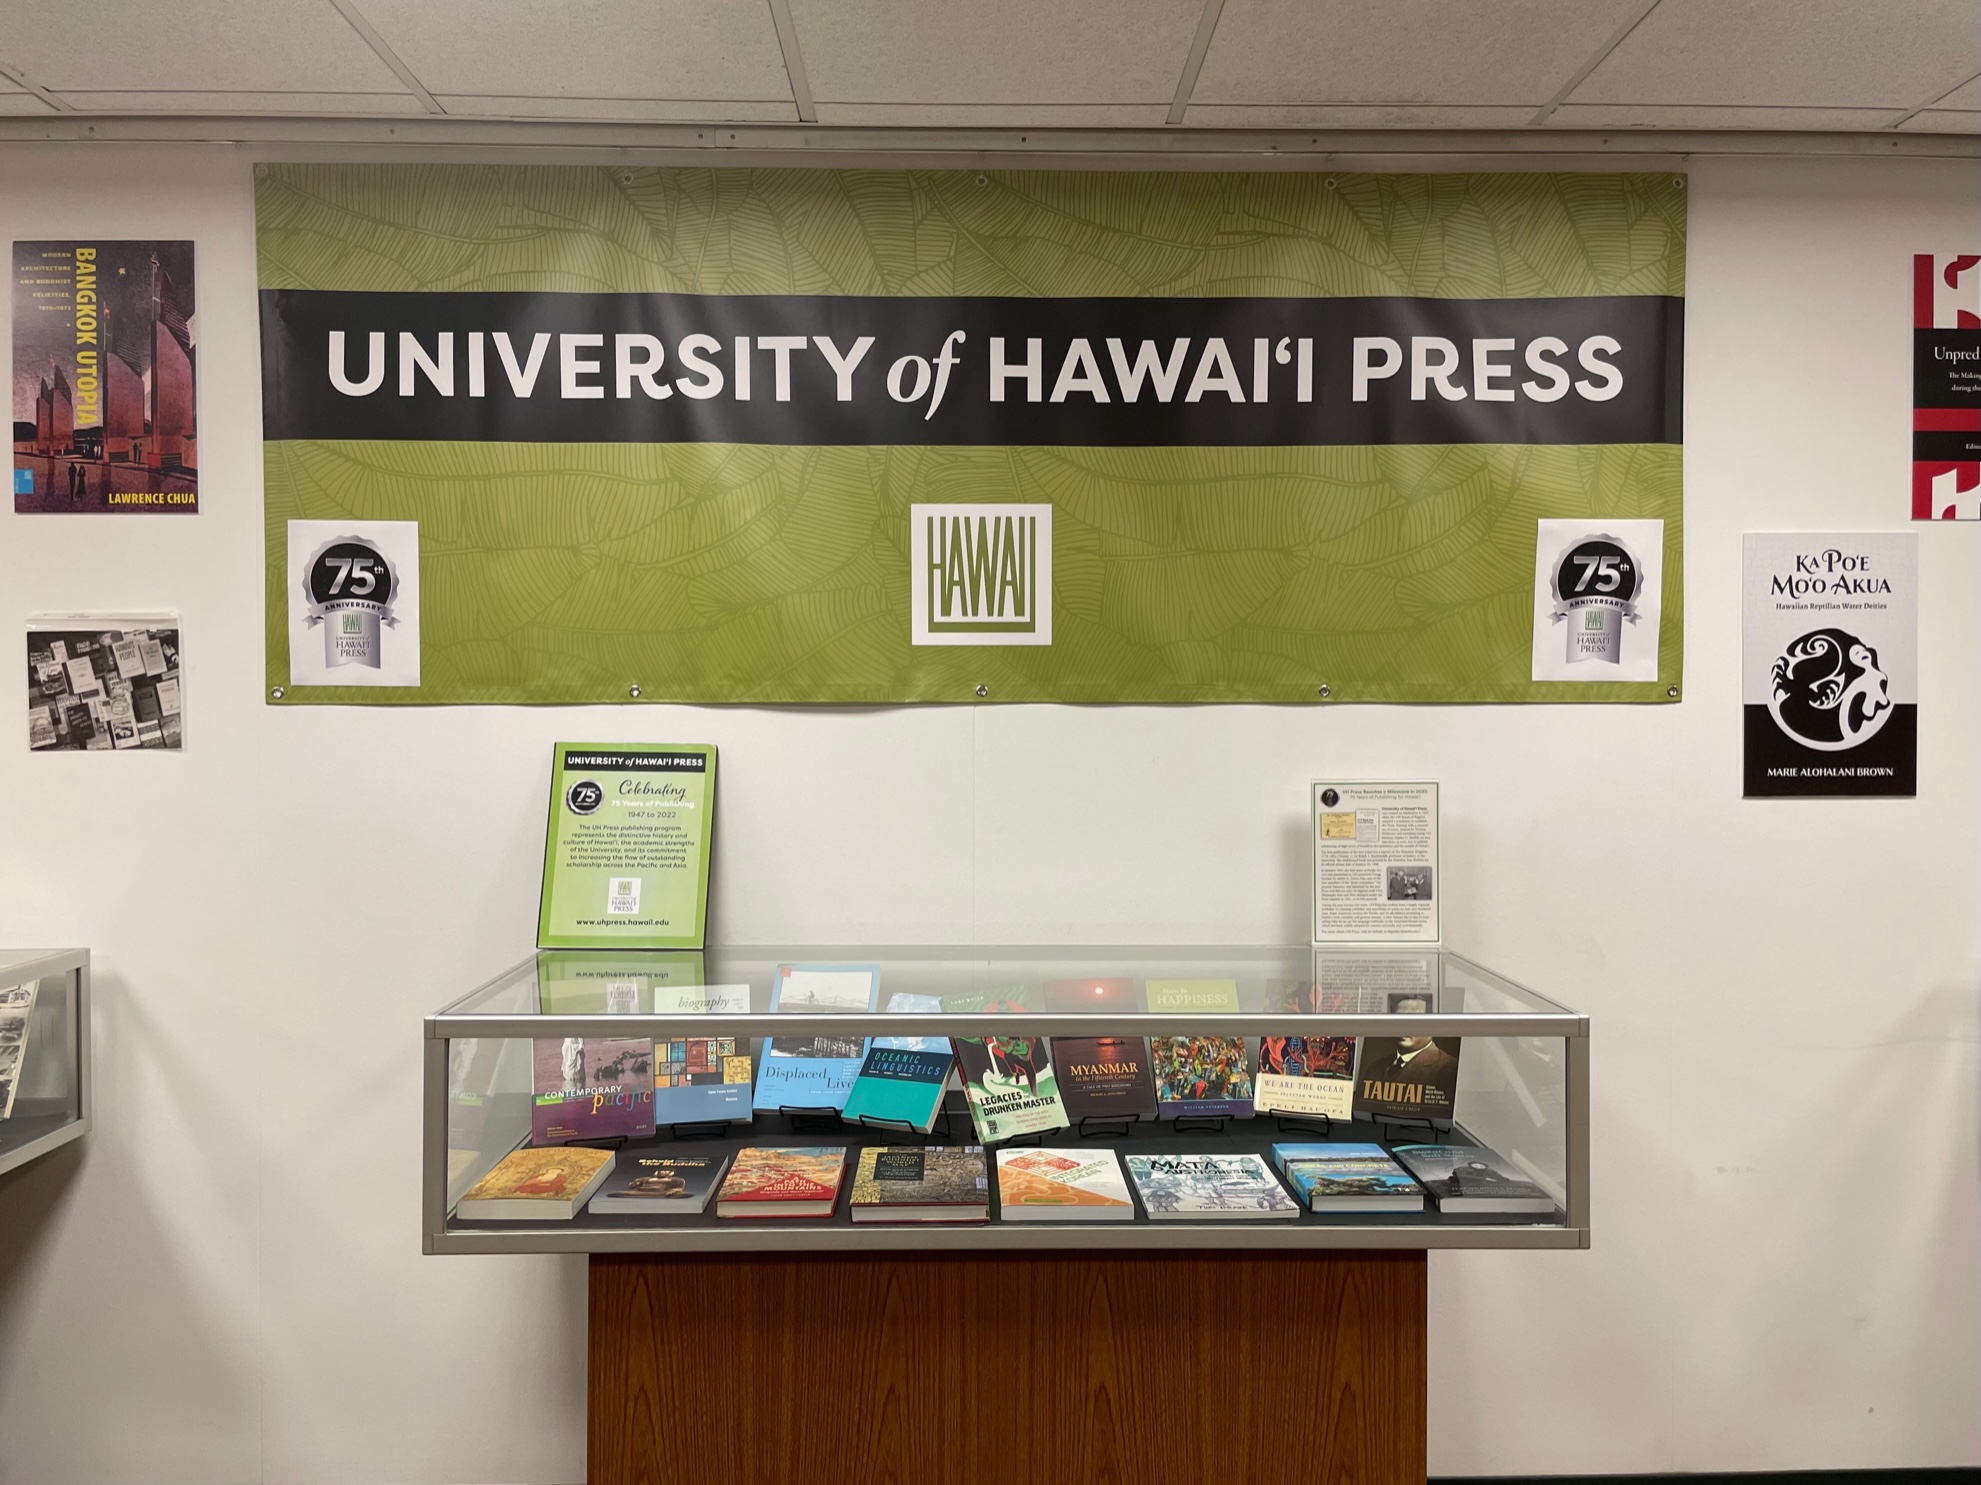 University of Hawaii Press Exhibit Banner and Display